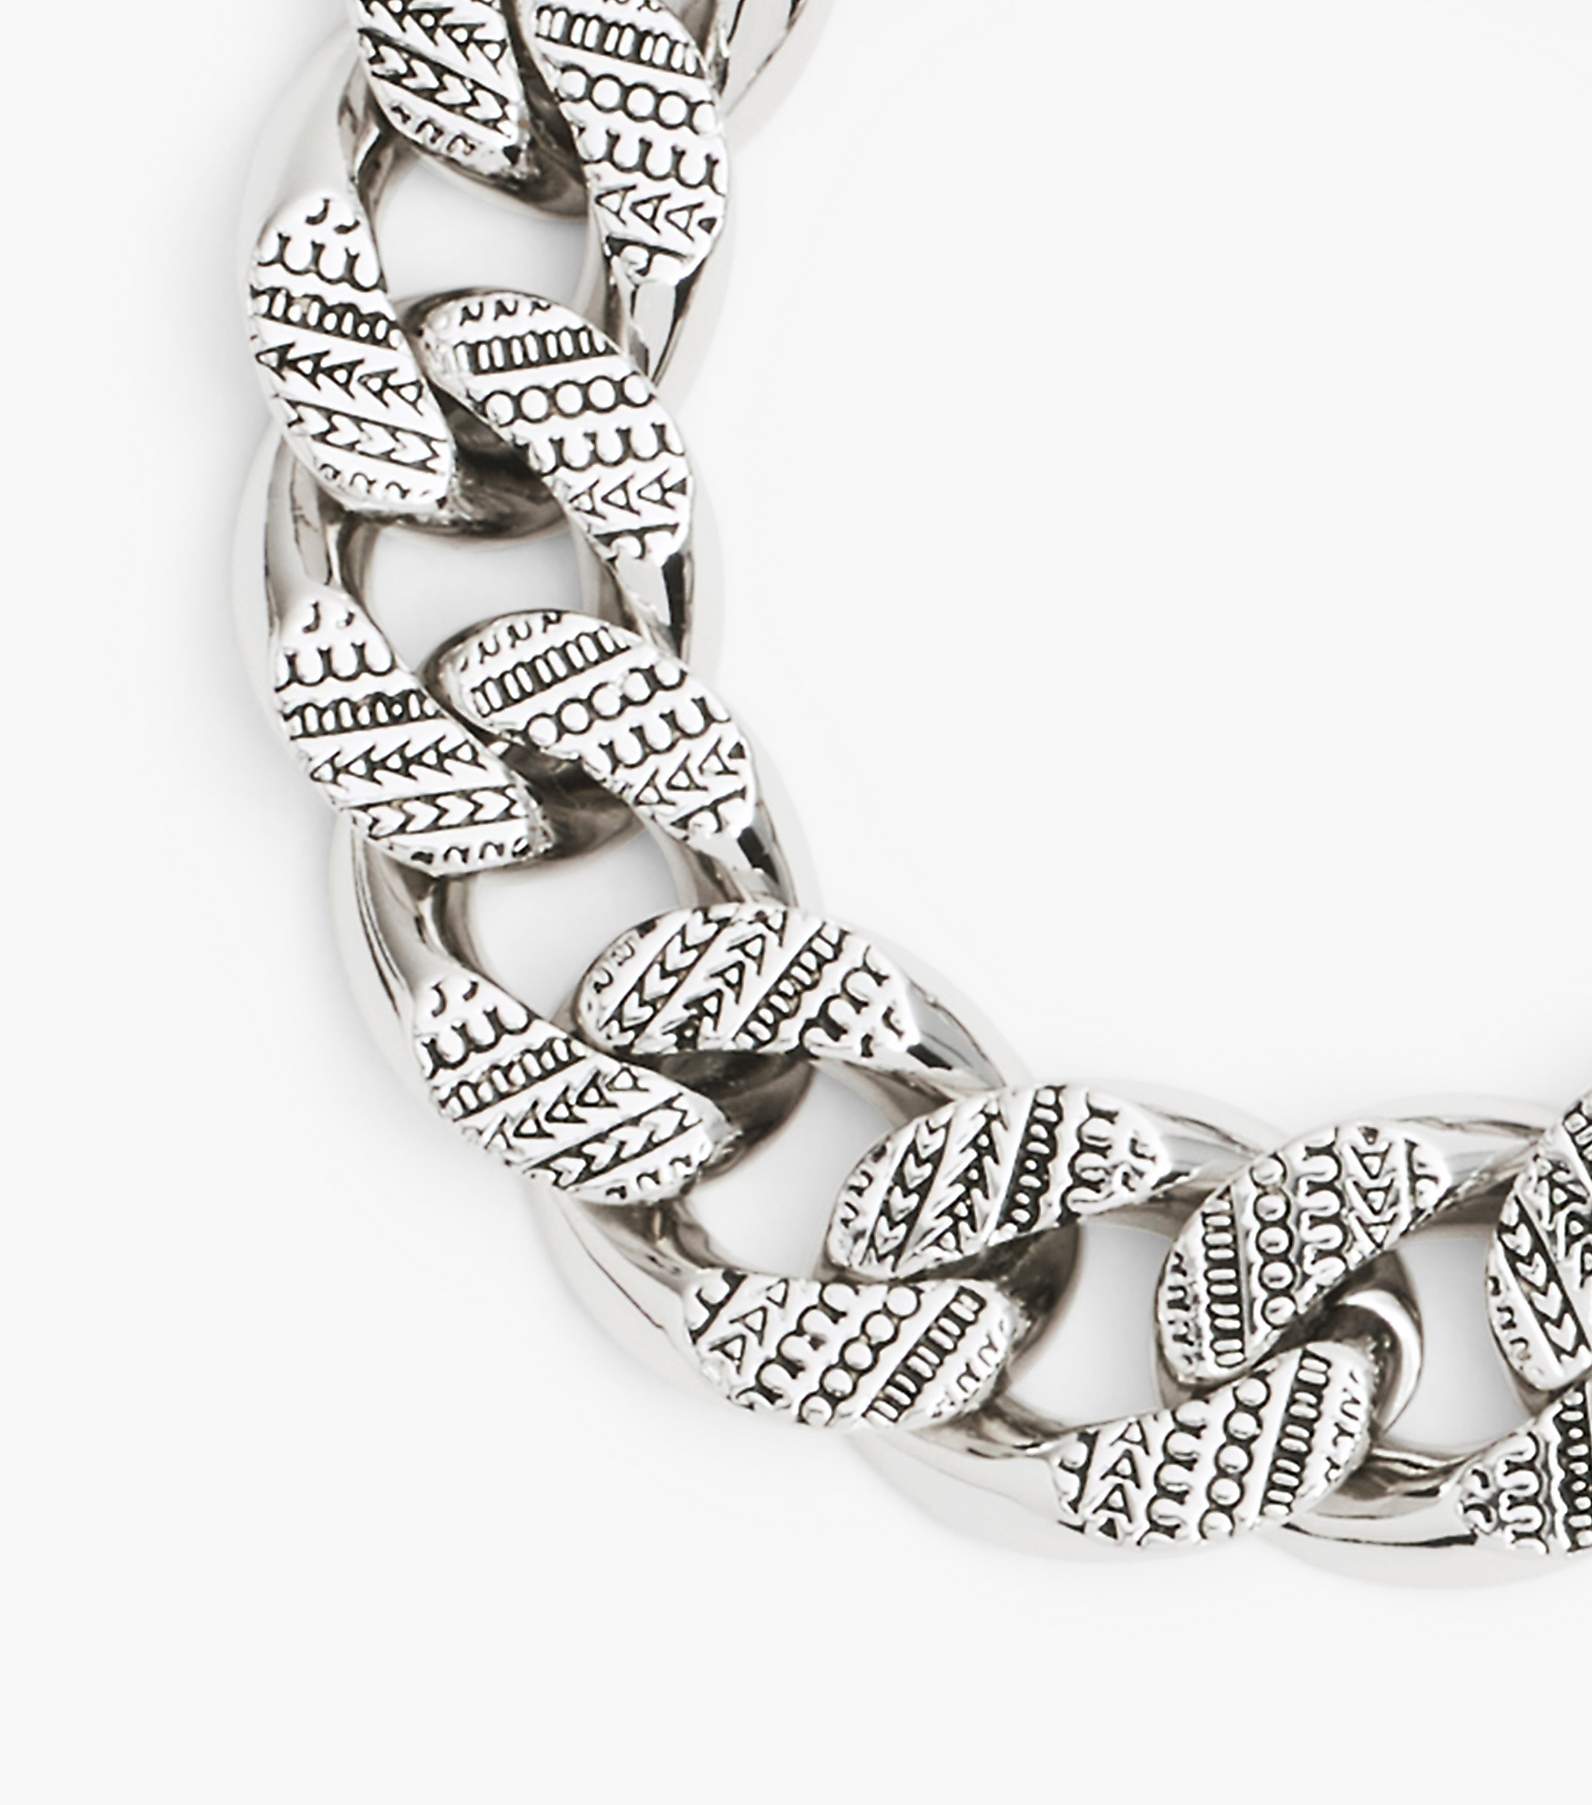 Marc Jacobs The Monogram Cuff Bracelet